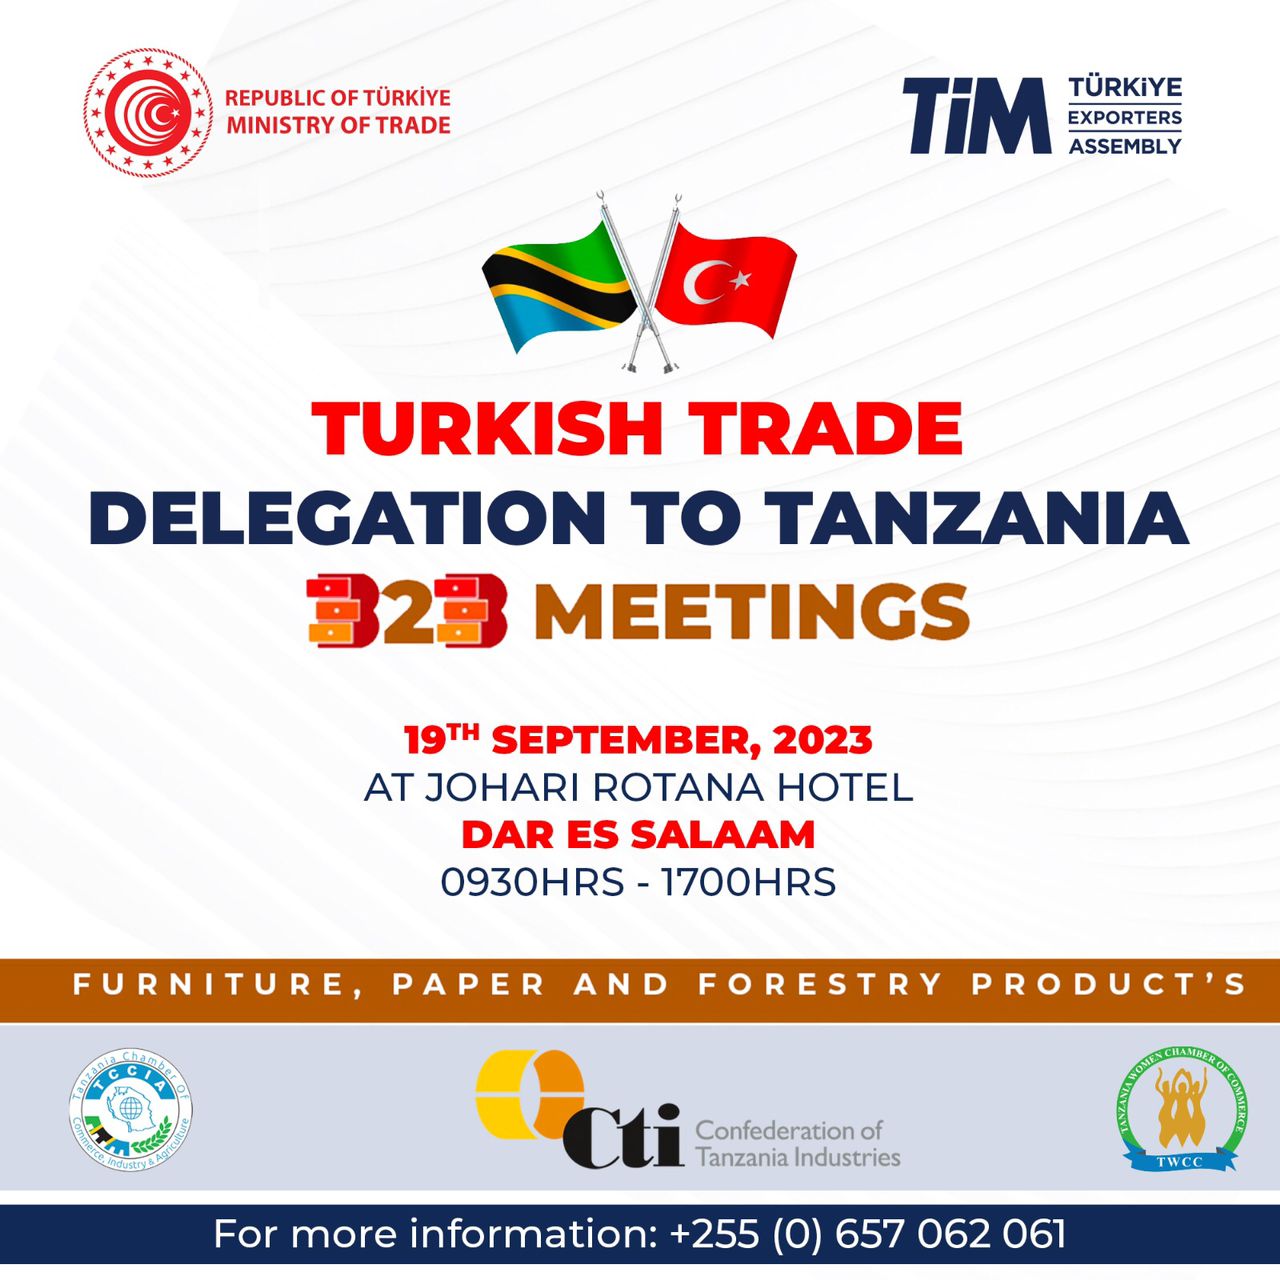 TURKISH TRADE DELEGATION TO TANZANIA B2B MEETINGS